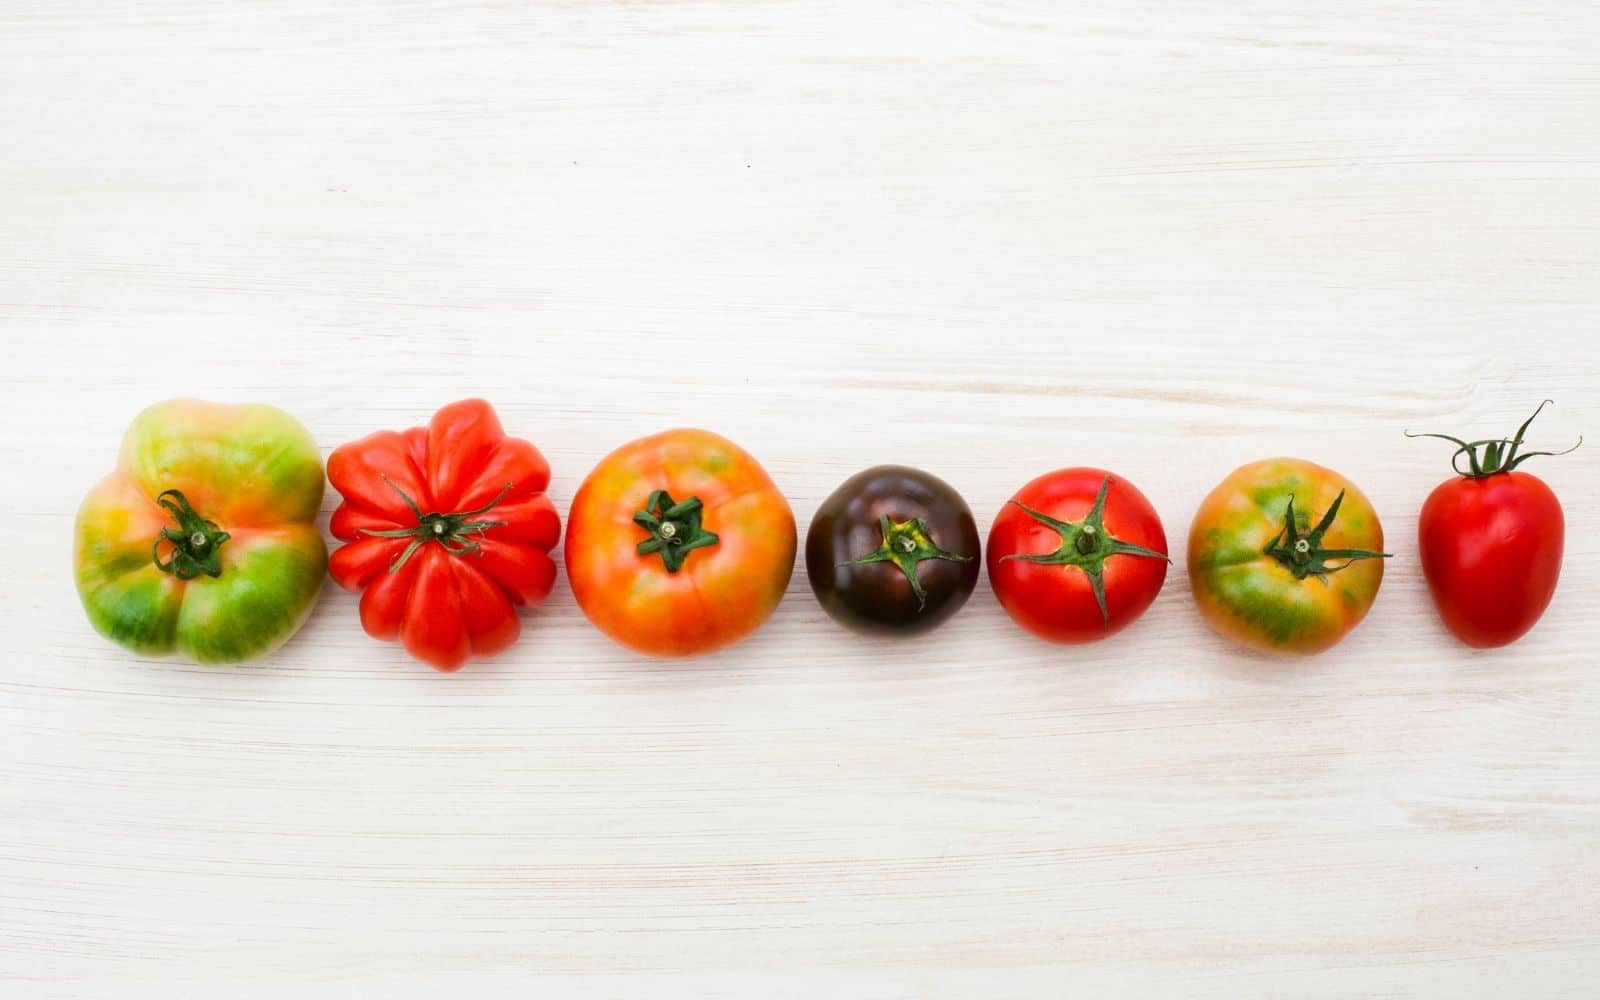 Tomato Varieties